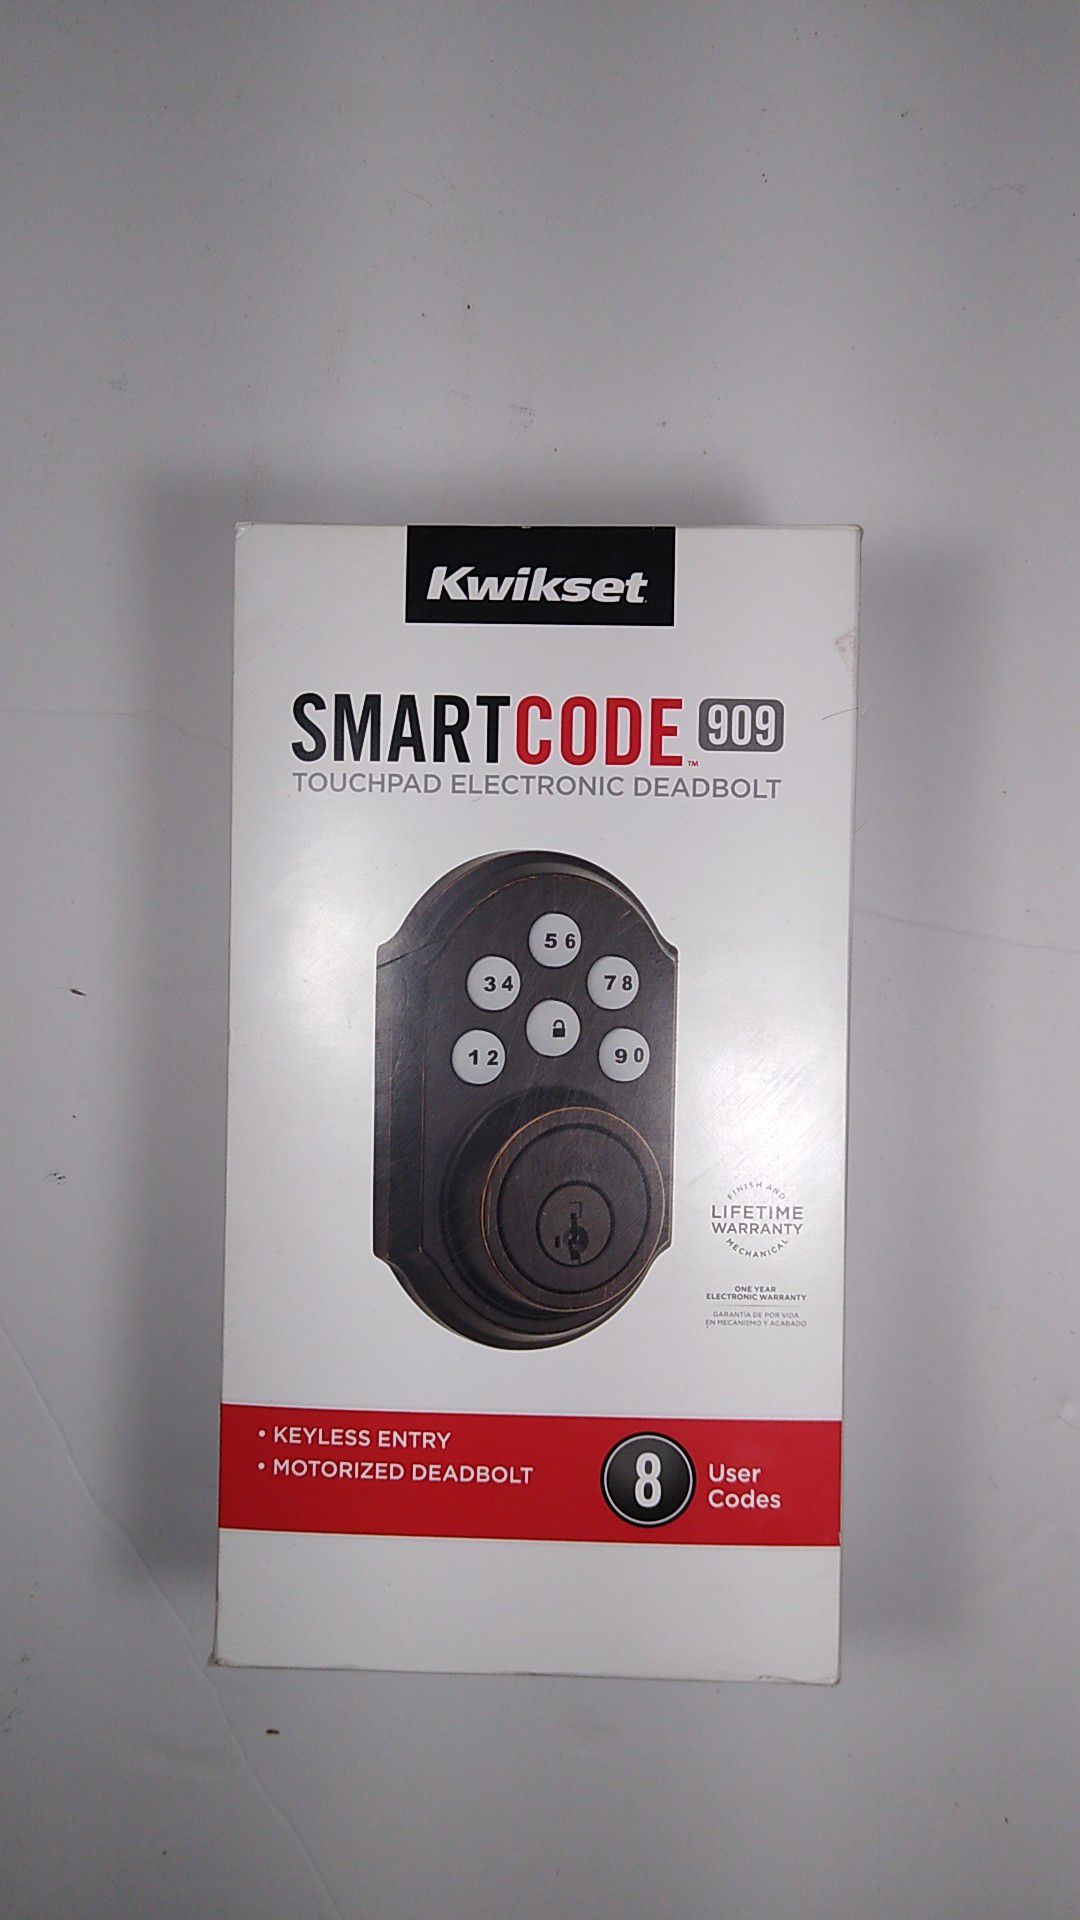 Kwikset SmartCode 909 TouchPad Bronze Electronic Deadbolt Smartkey Keyless Entry